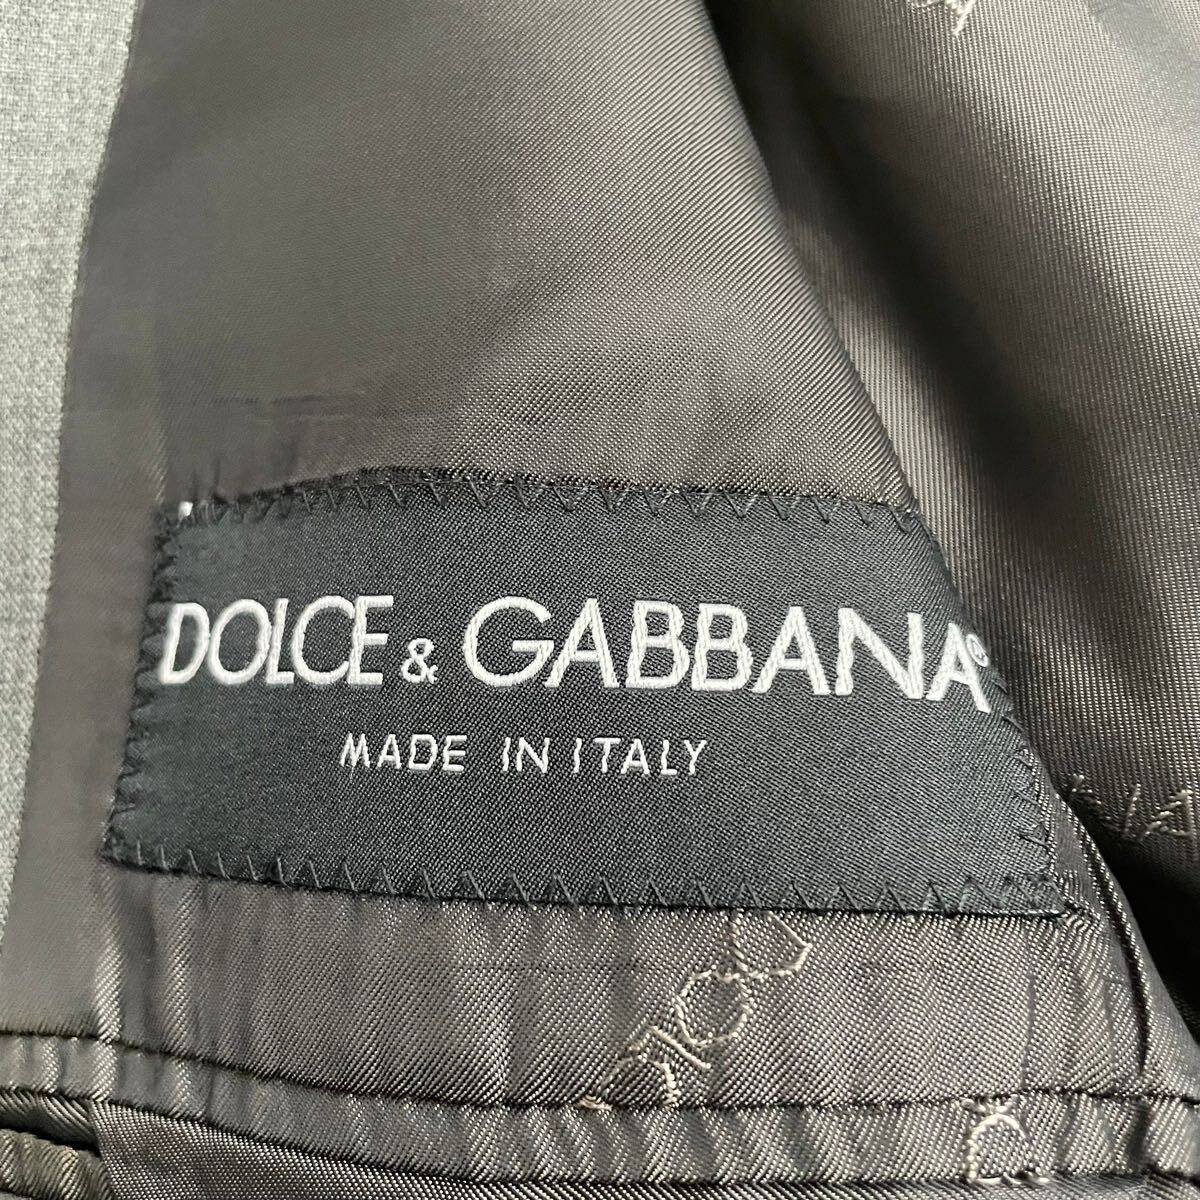 * DOLCE&GABBANA Dolce & Gabbana tailored jacket блейзер 2. шерсть XL ранг подкладка бренд Logo мужской *